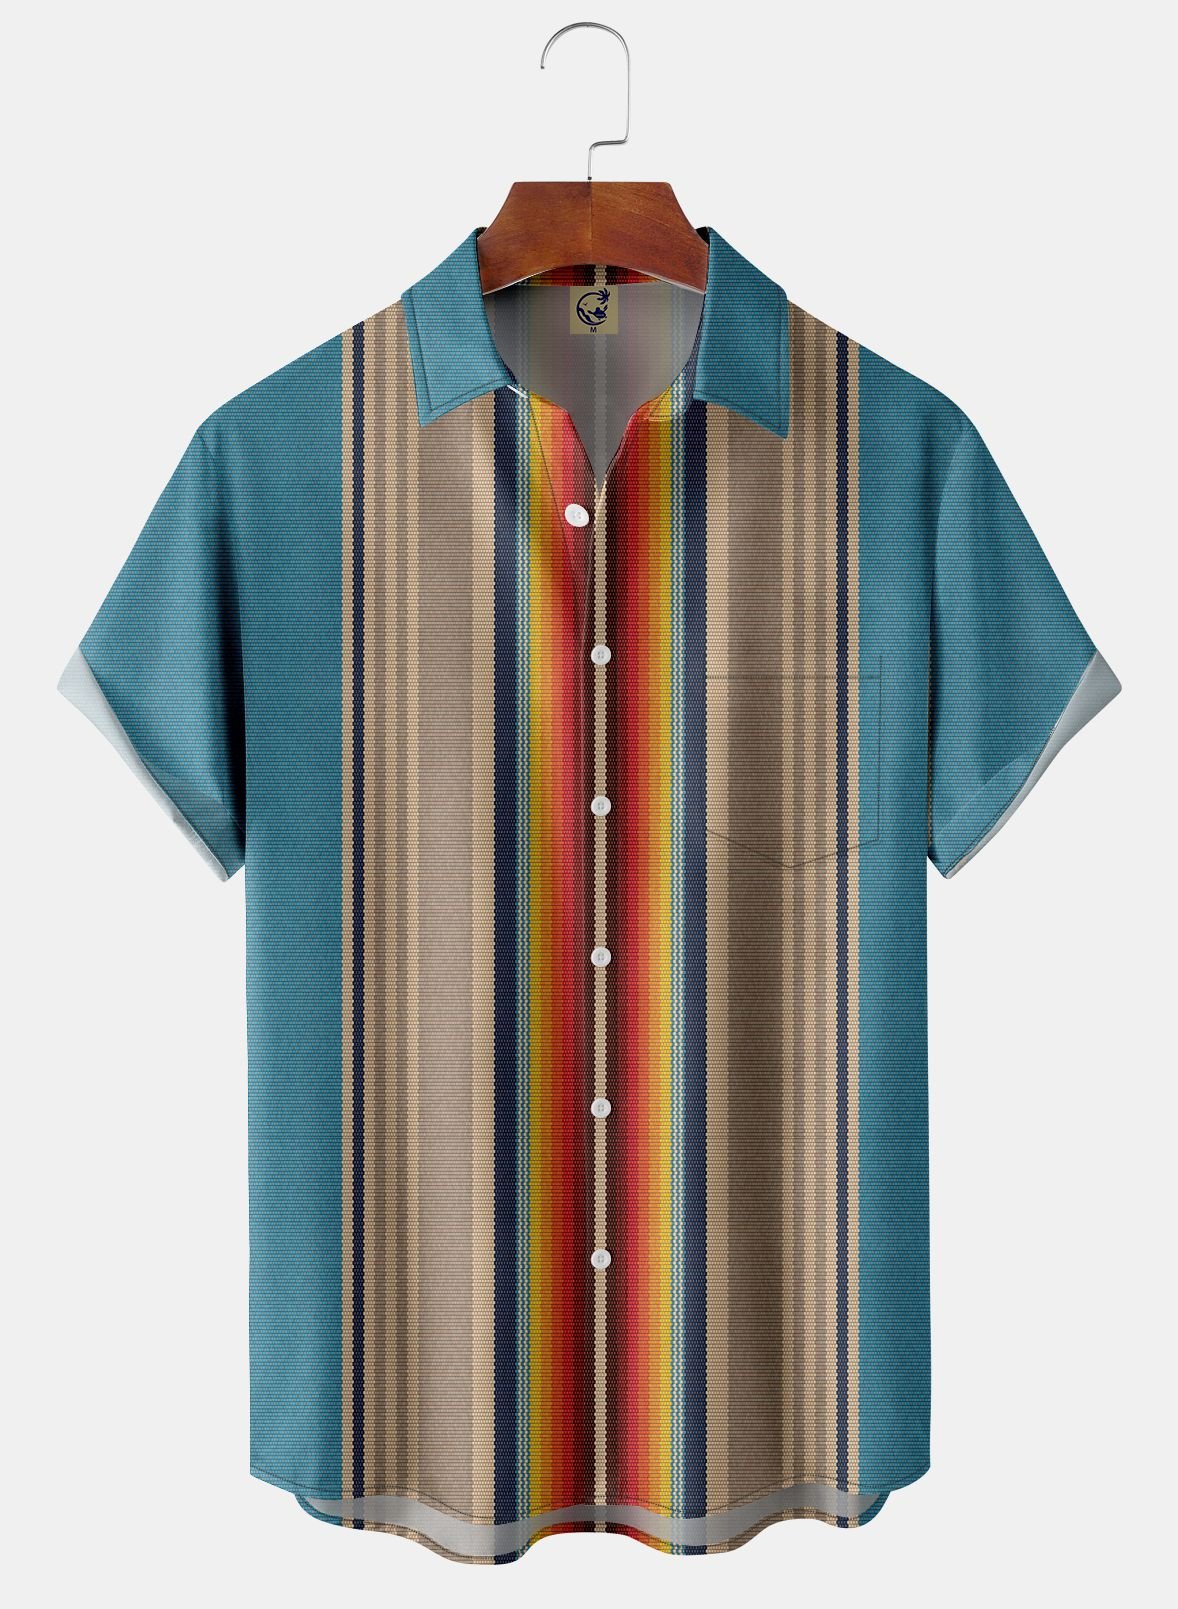 Mexico Stripe Chest Pocket Short Sleeve Casual Shirt